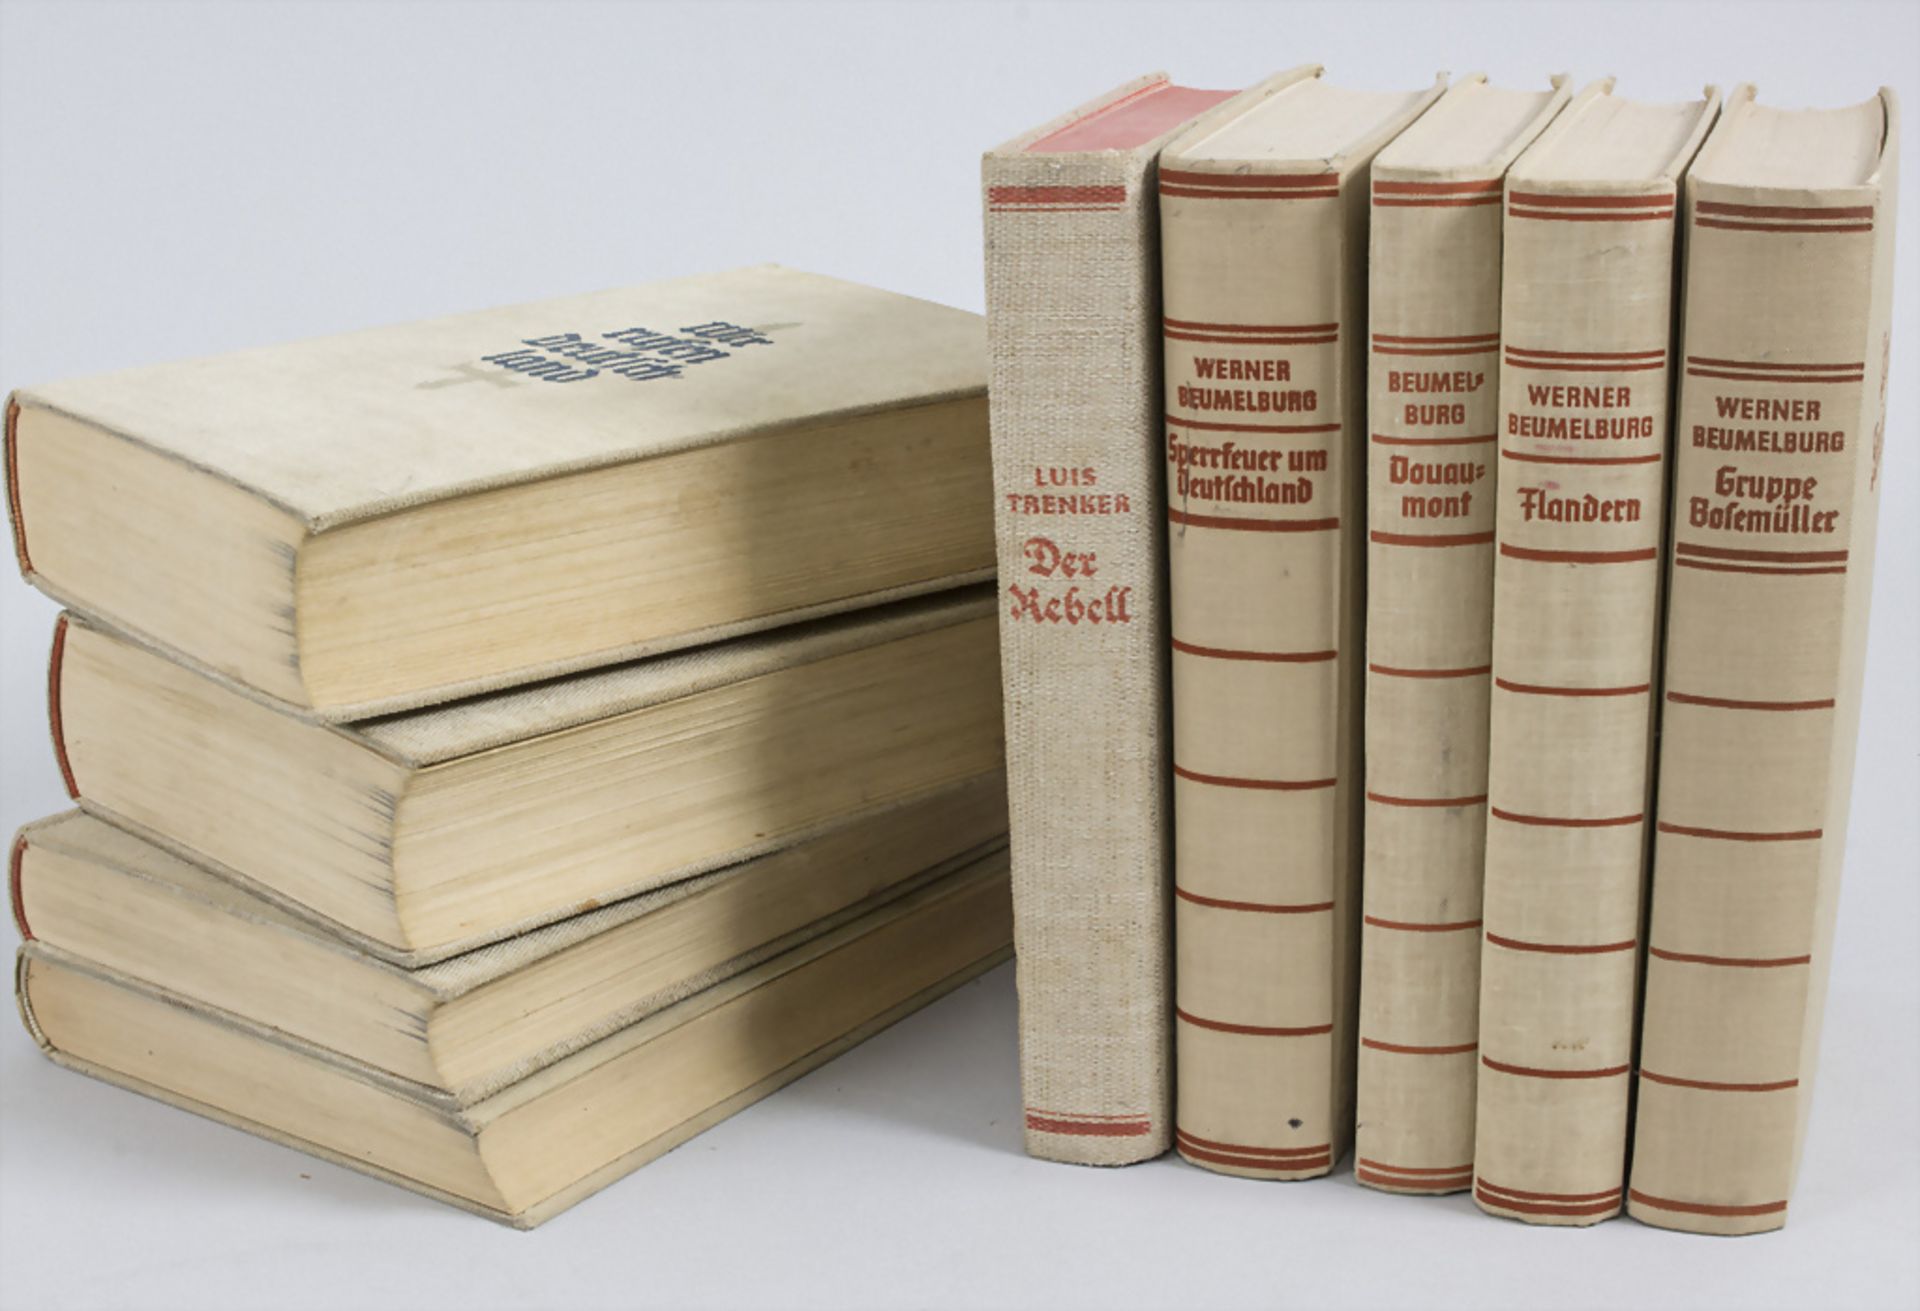 Konvolut: Romane und Hausbuch / Novels and a housebook, 3. Reich, ab 1930